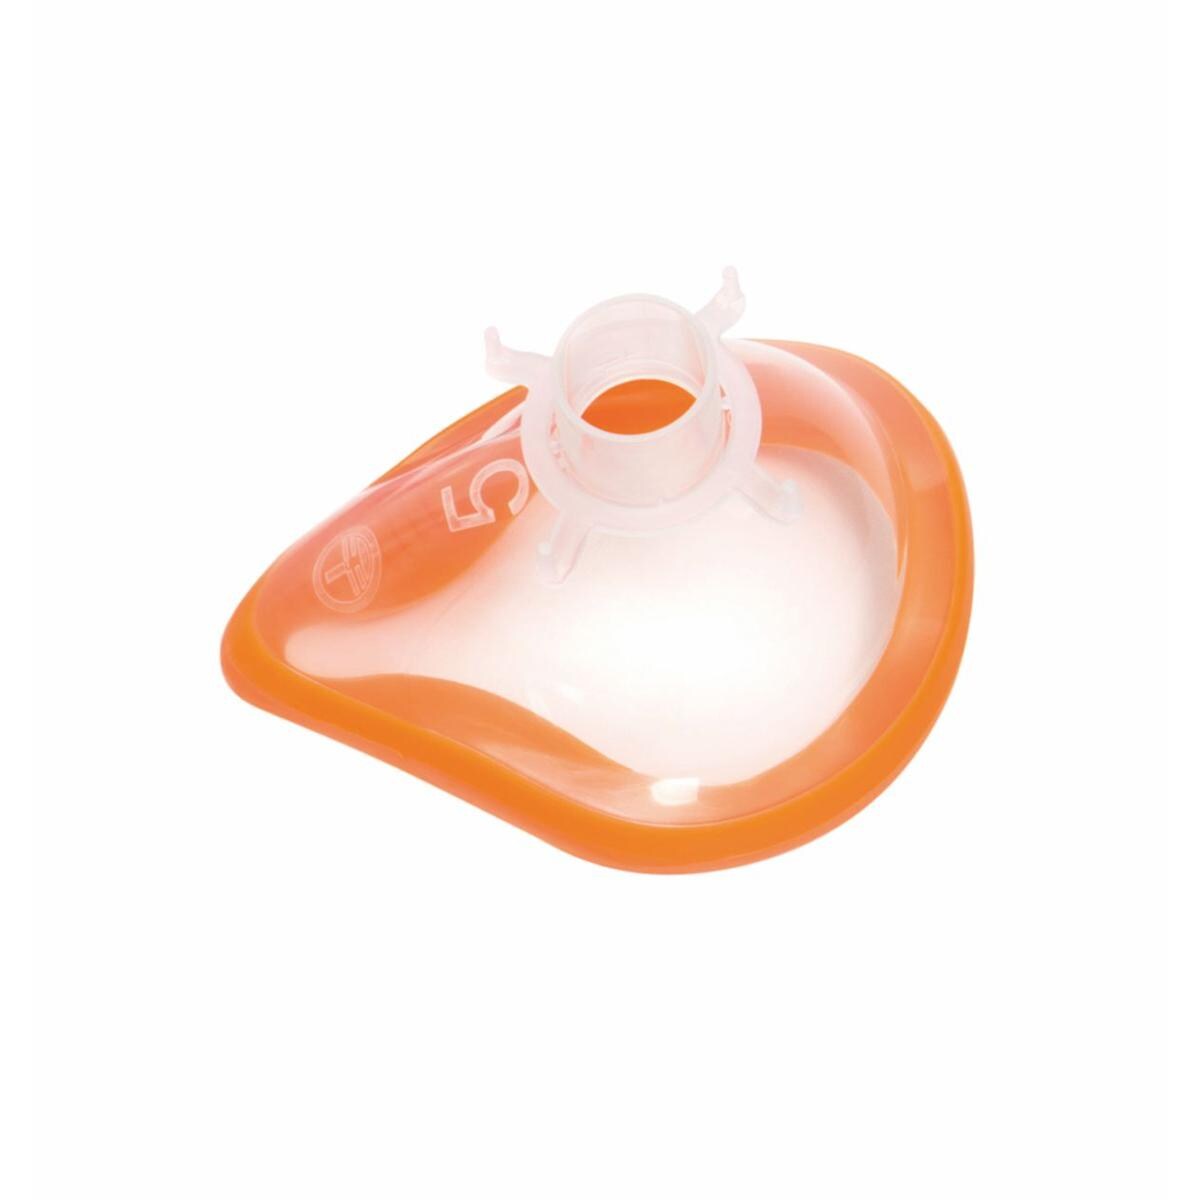 ClearLite Mask Size 5 Lrg Adult 22F Fitting Orange